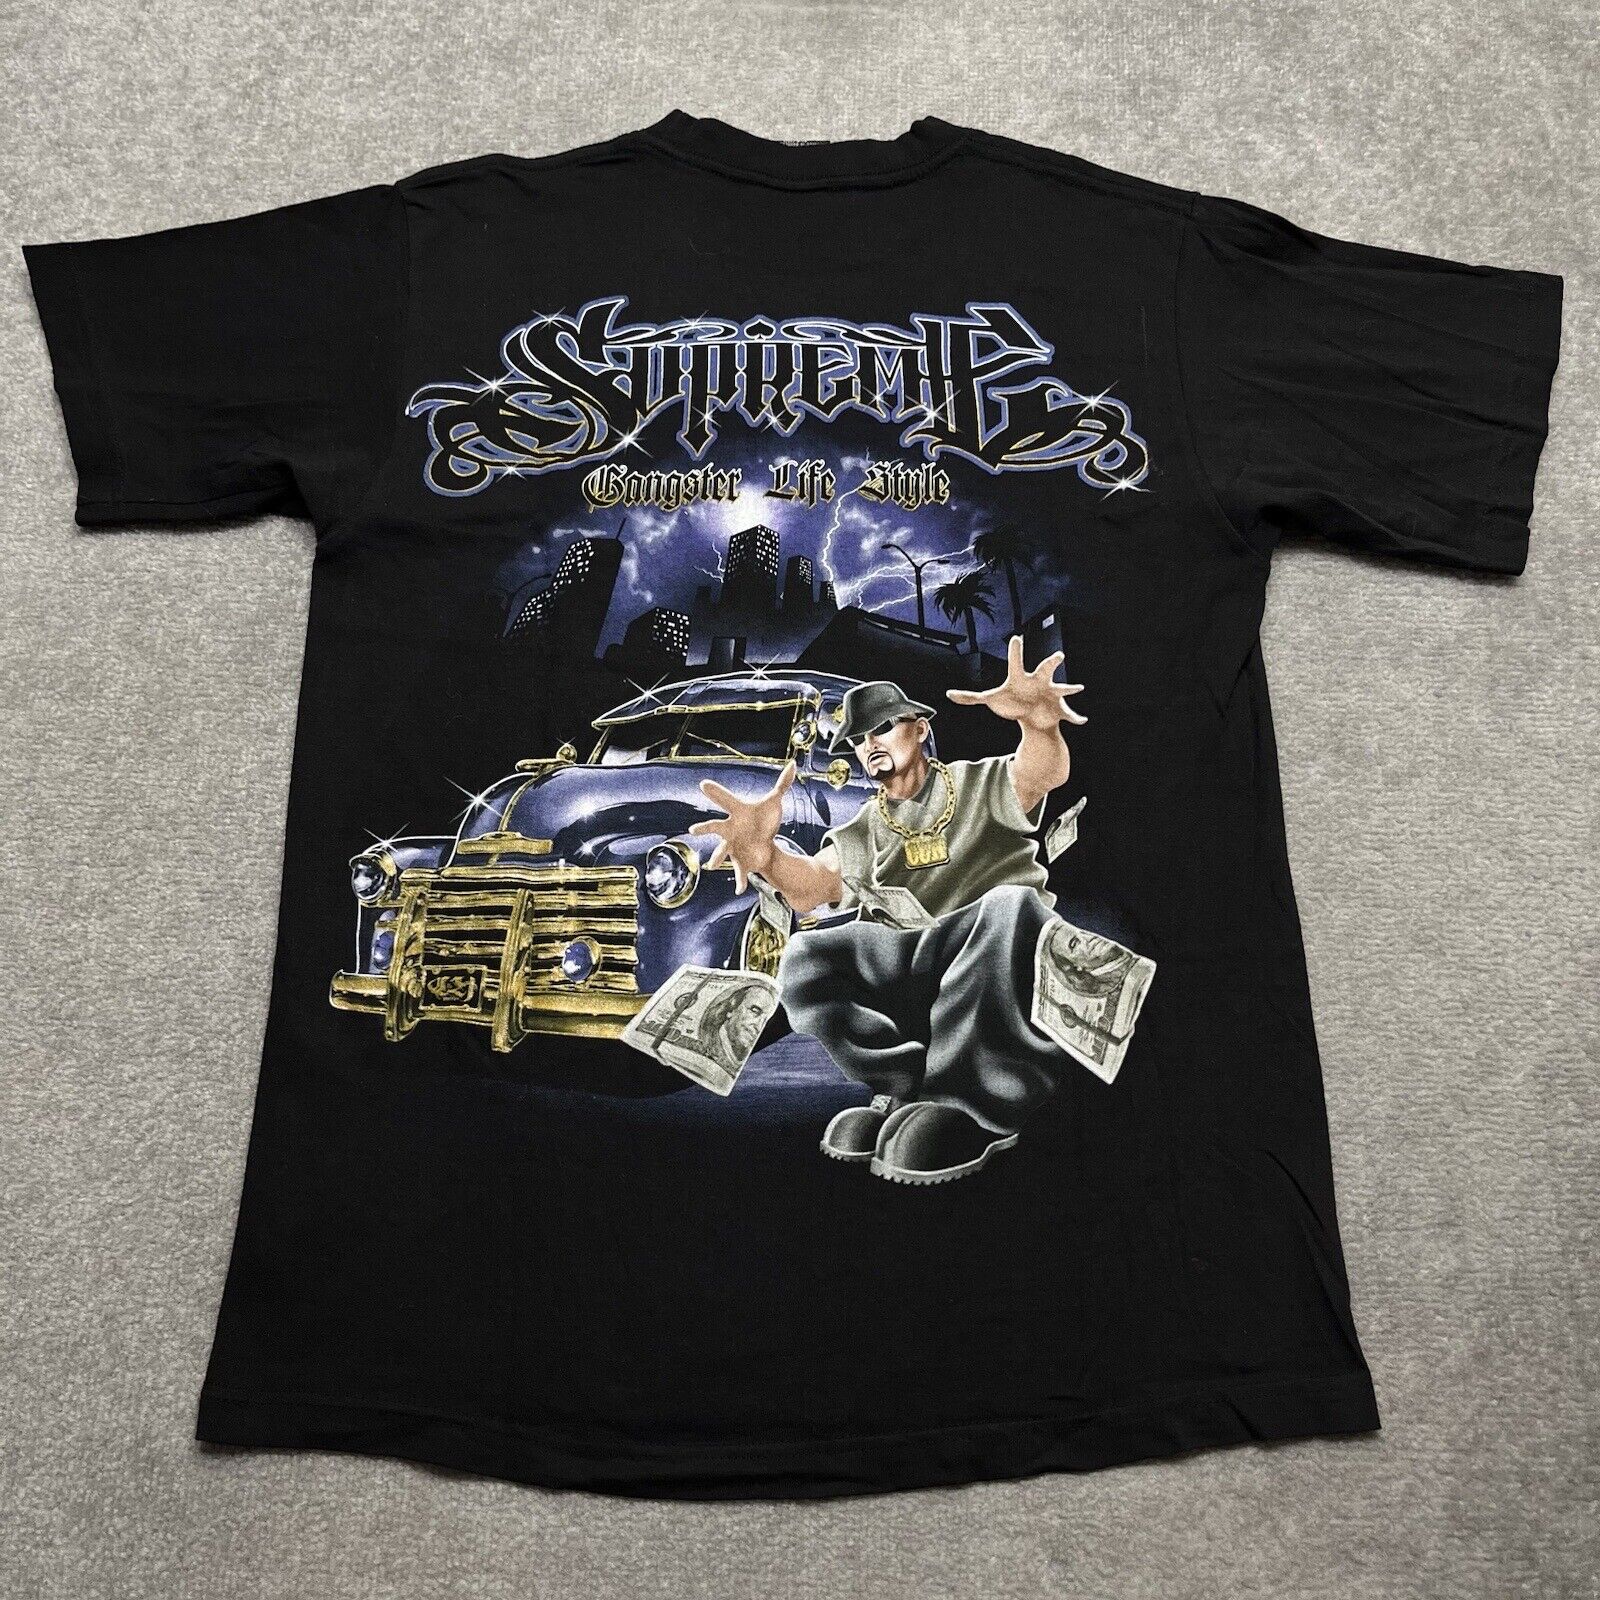 Lowrider Supreme Gangster Life Style T-shirt Men’… - image 1